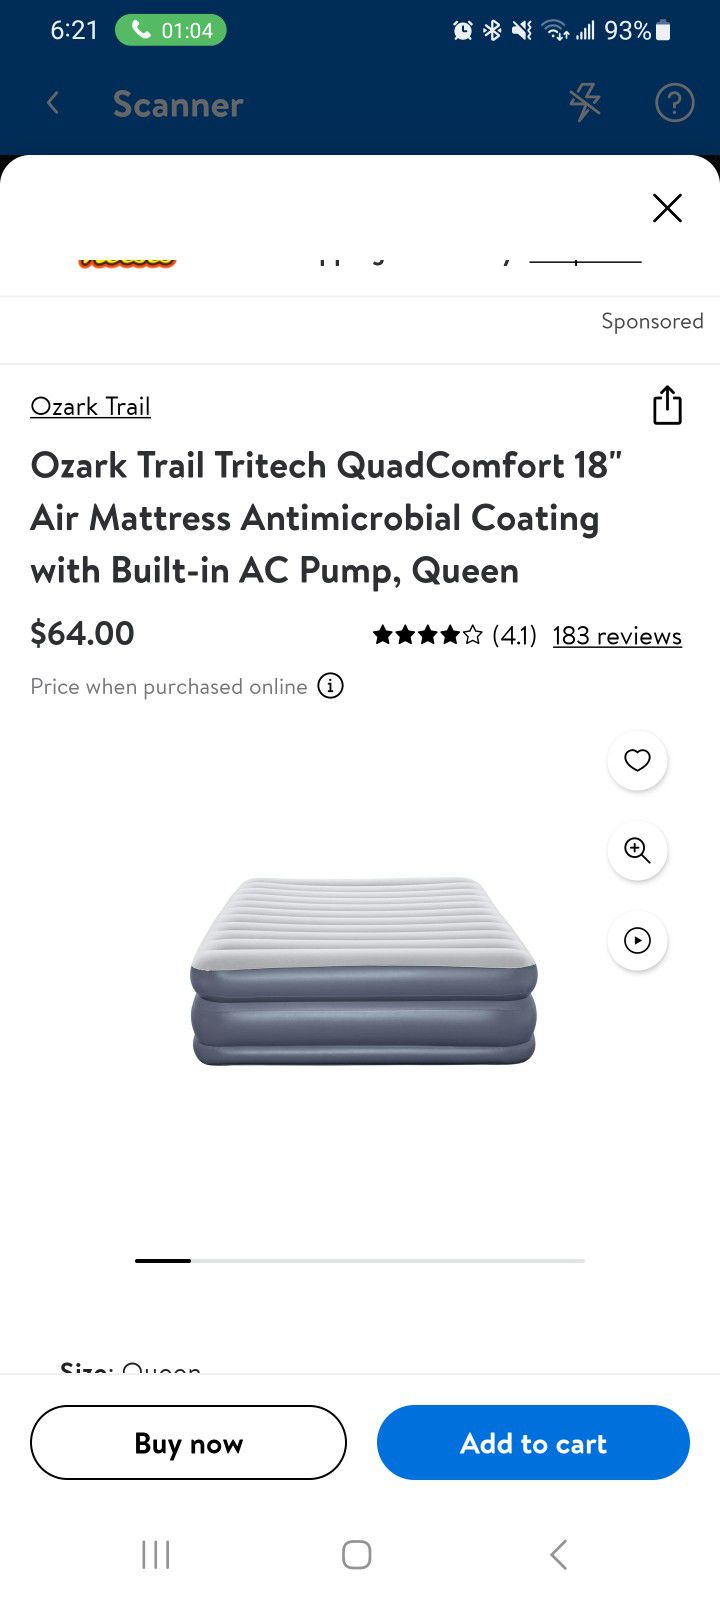 Ozark Trail Tritech QuadComfort 18 Air Mattress Antimicrobial Coating with Built-in AC Pump, Queen